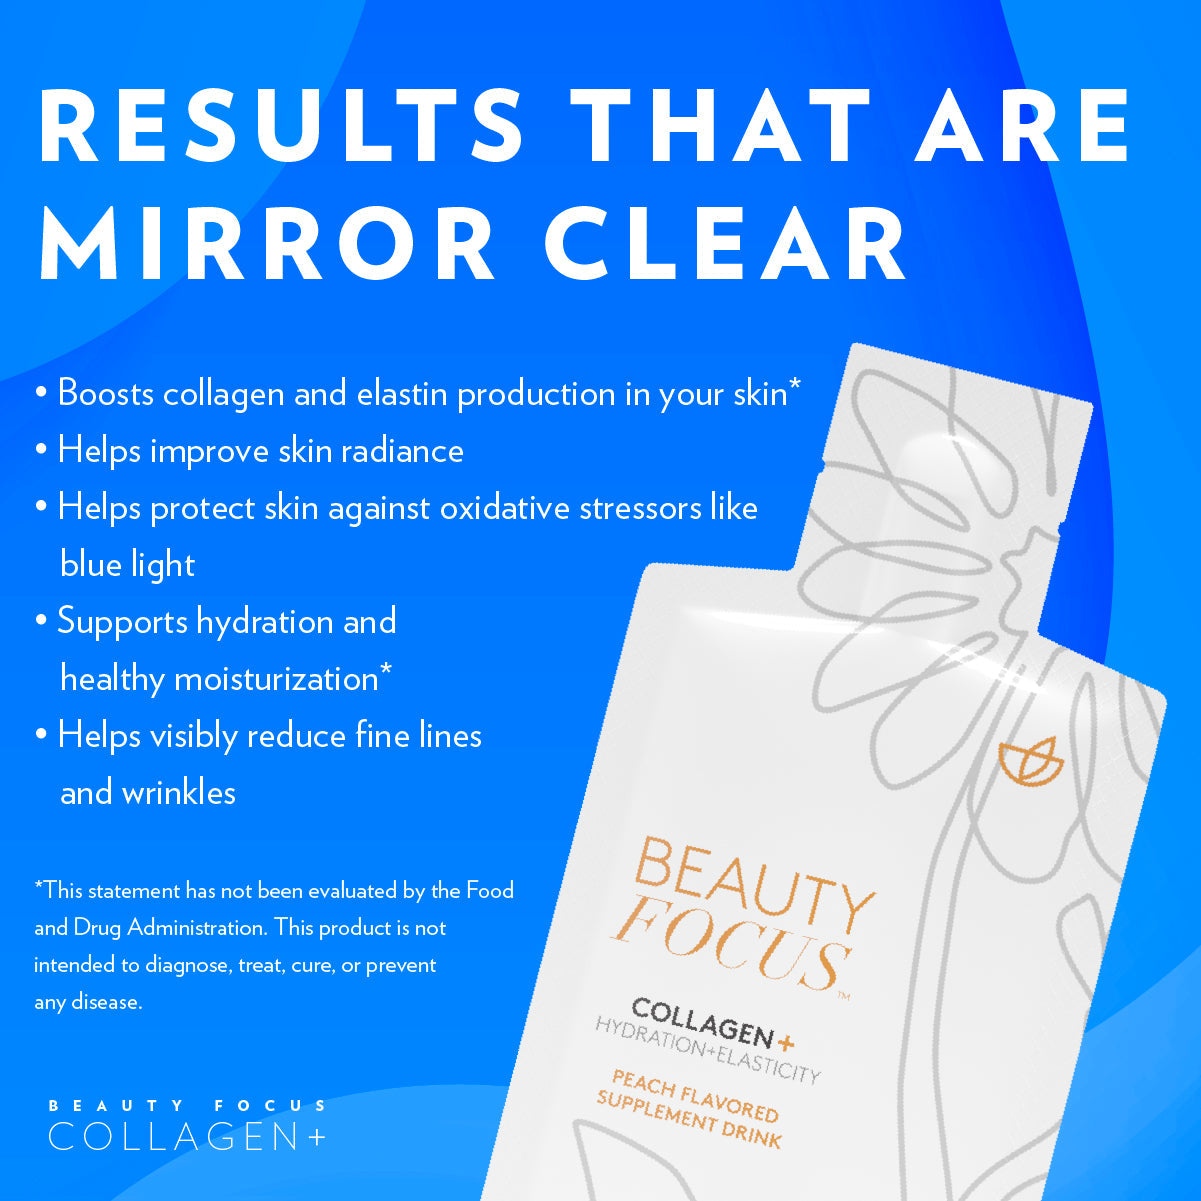 Beauty Focus Collagen - LIMITED DEAL!!